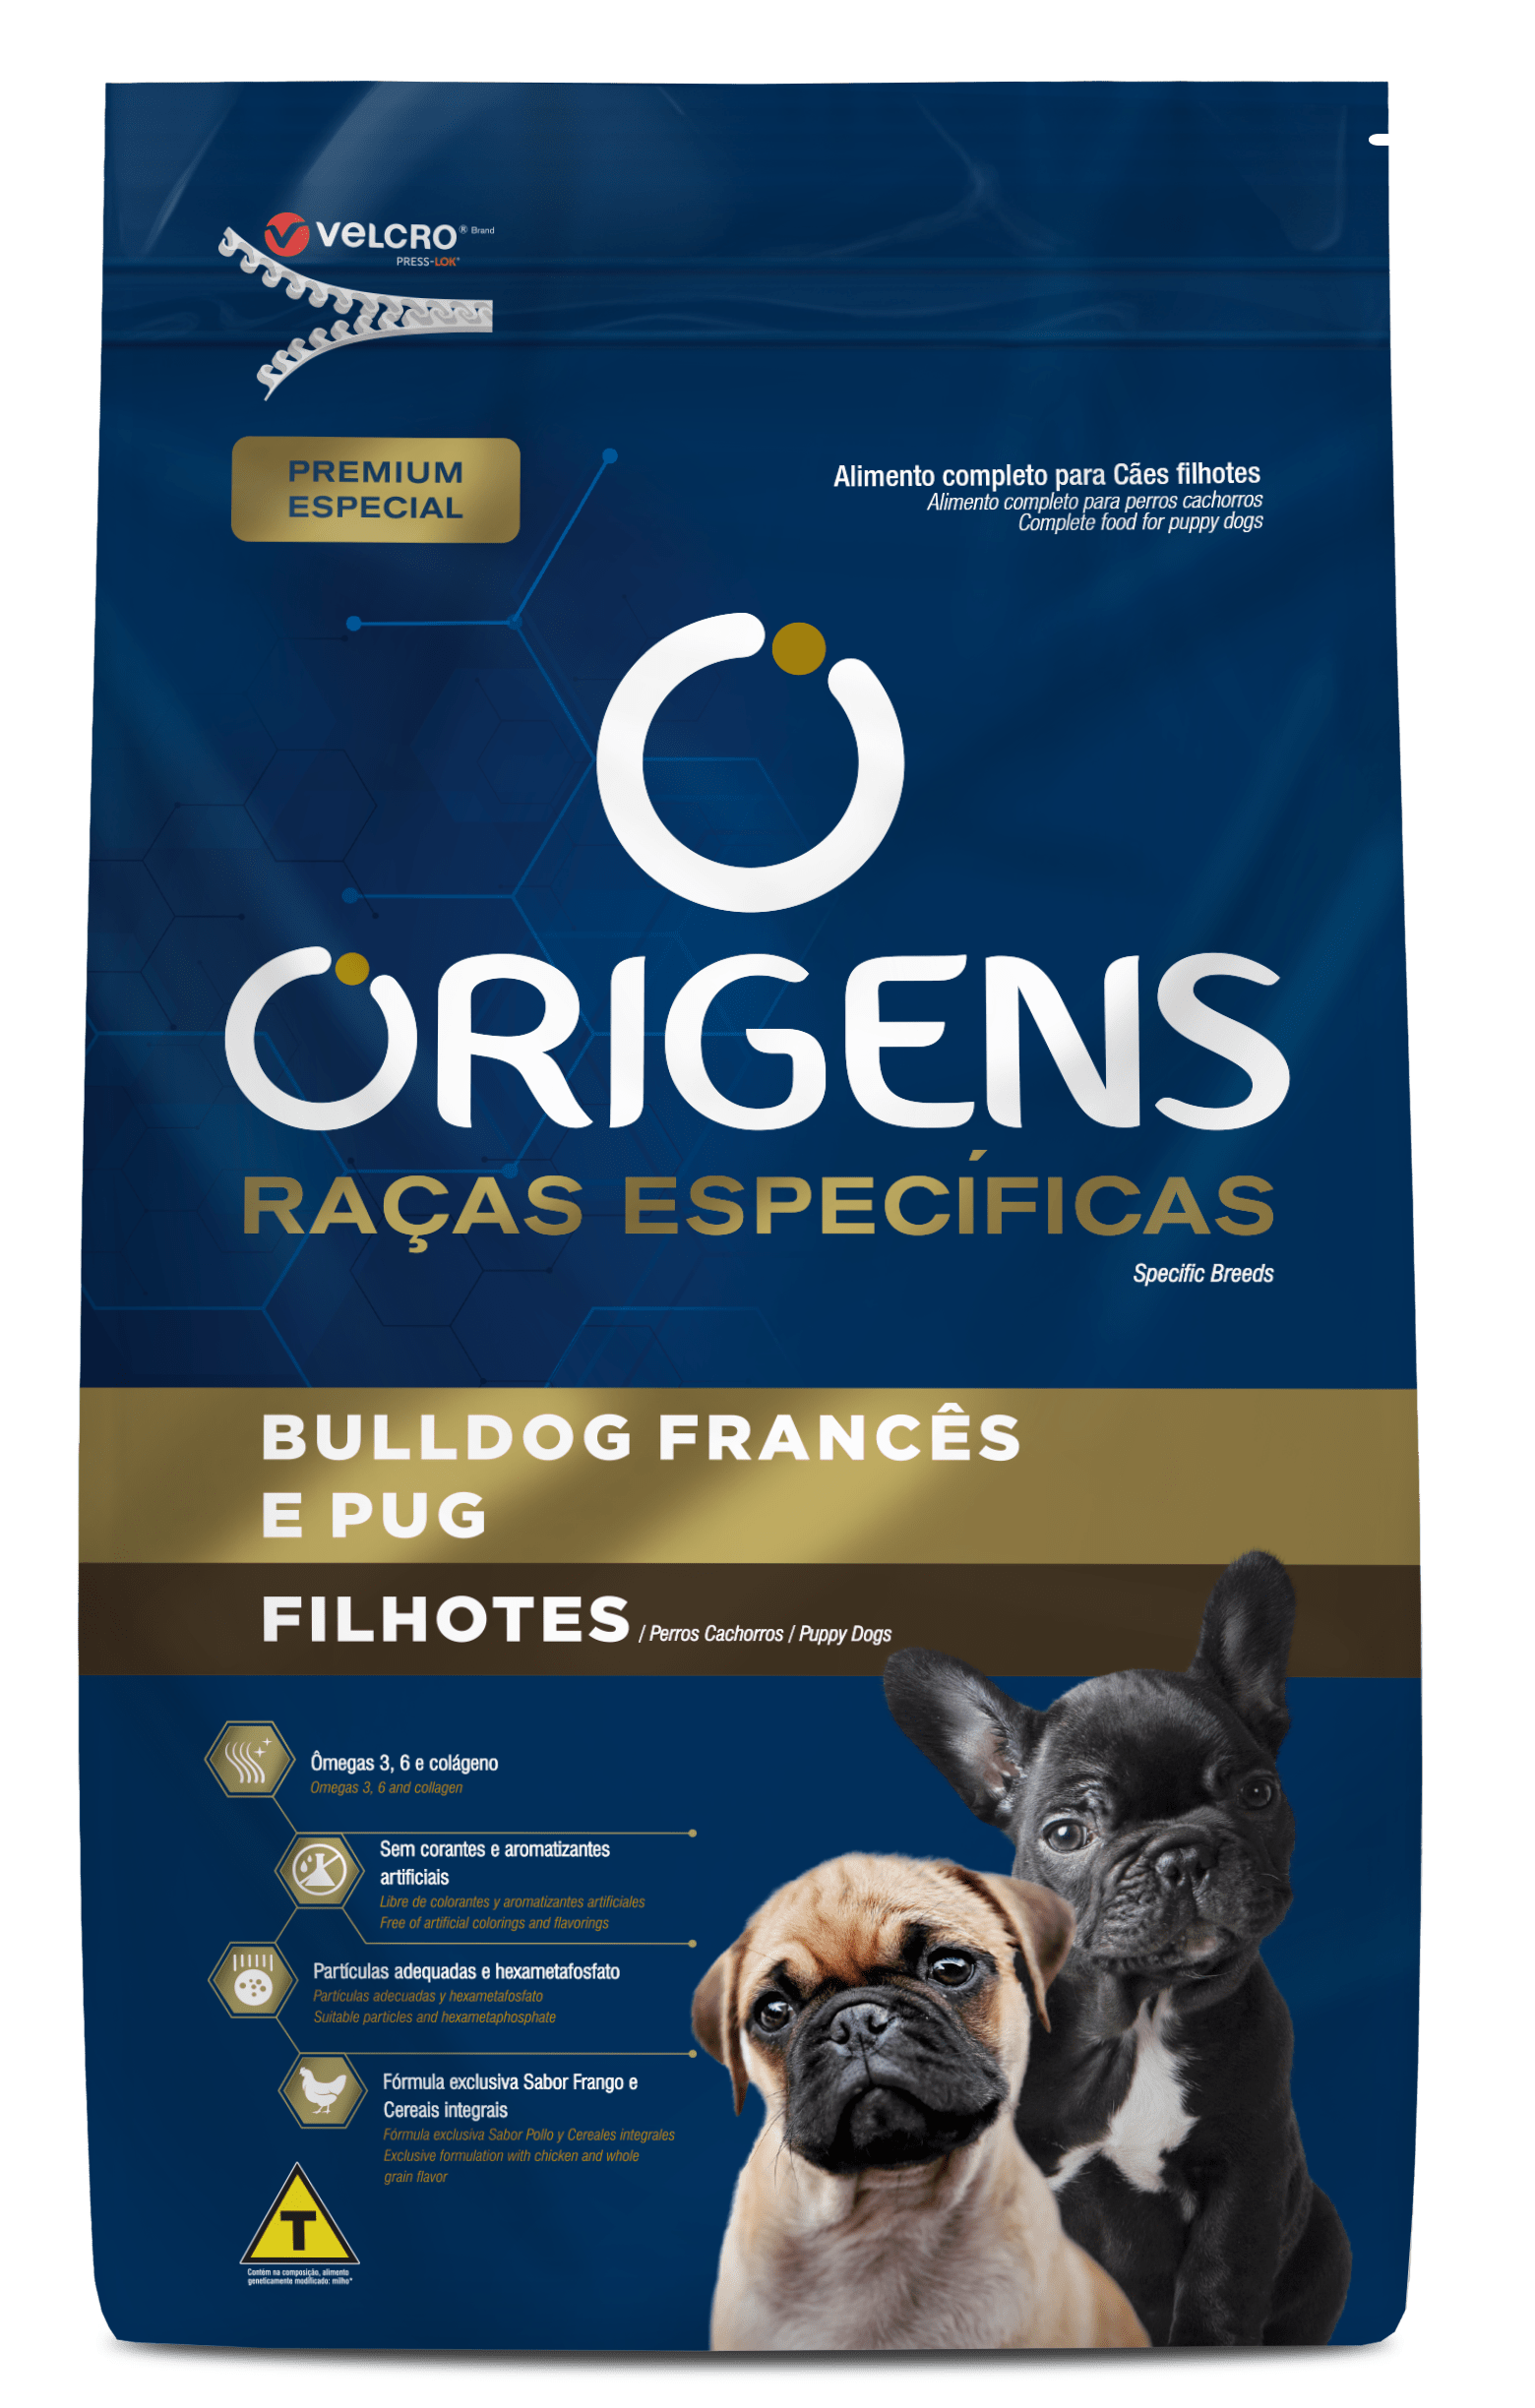 Origens Premium Especial Specific Breeds Puppies French Bulldog and Pug